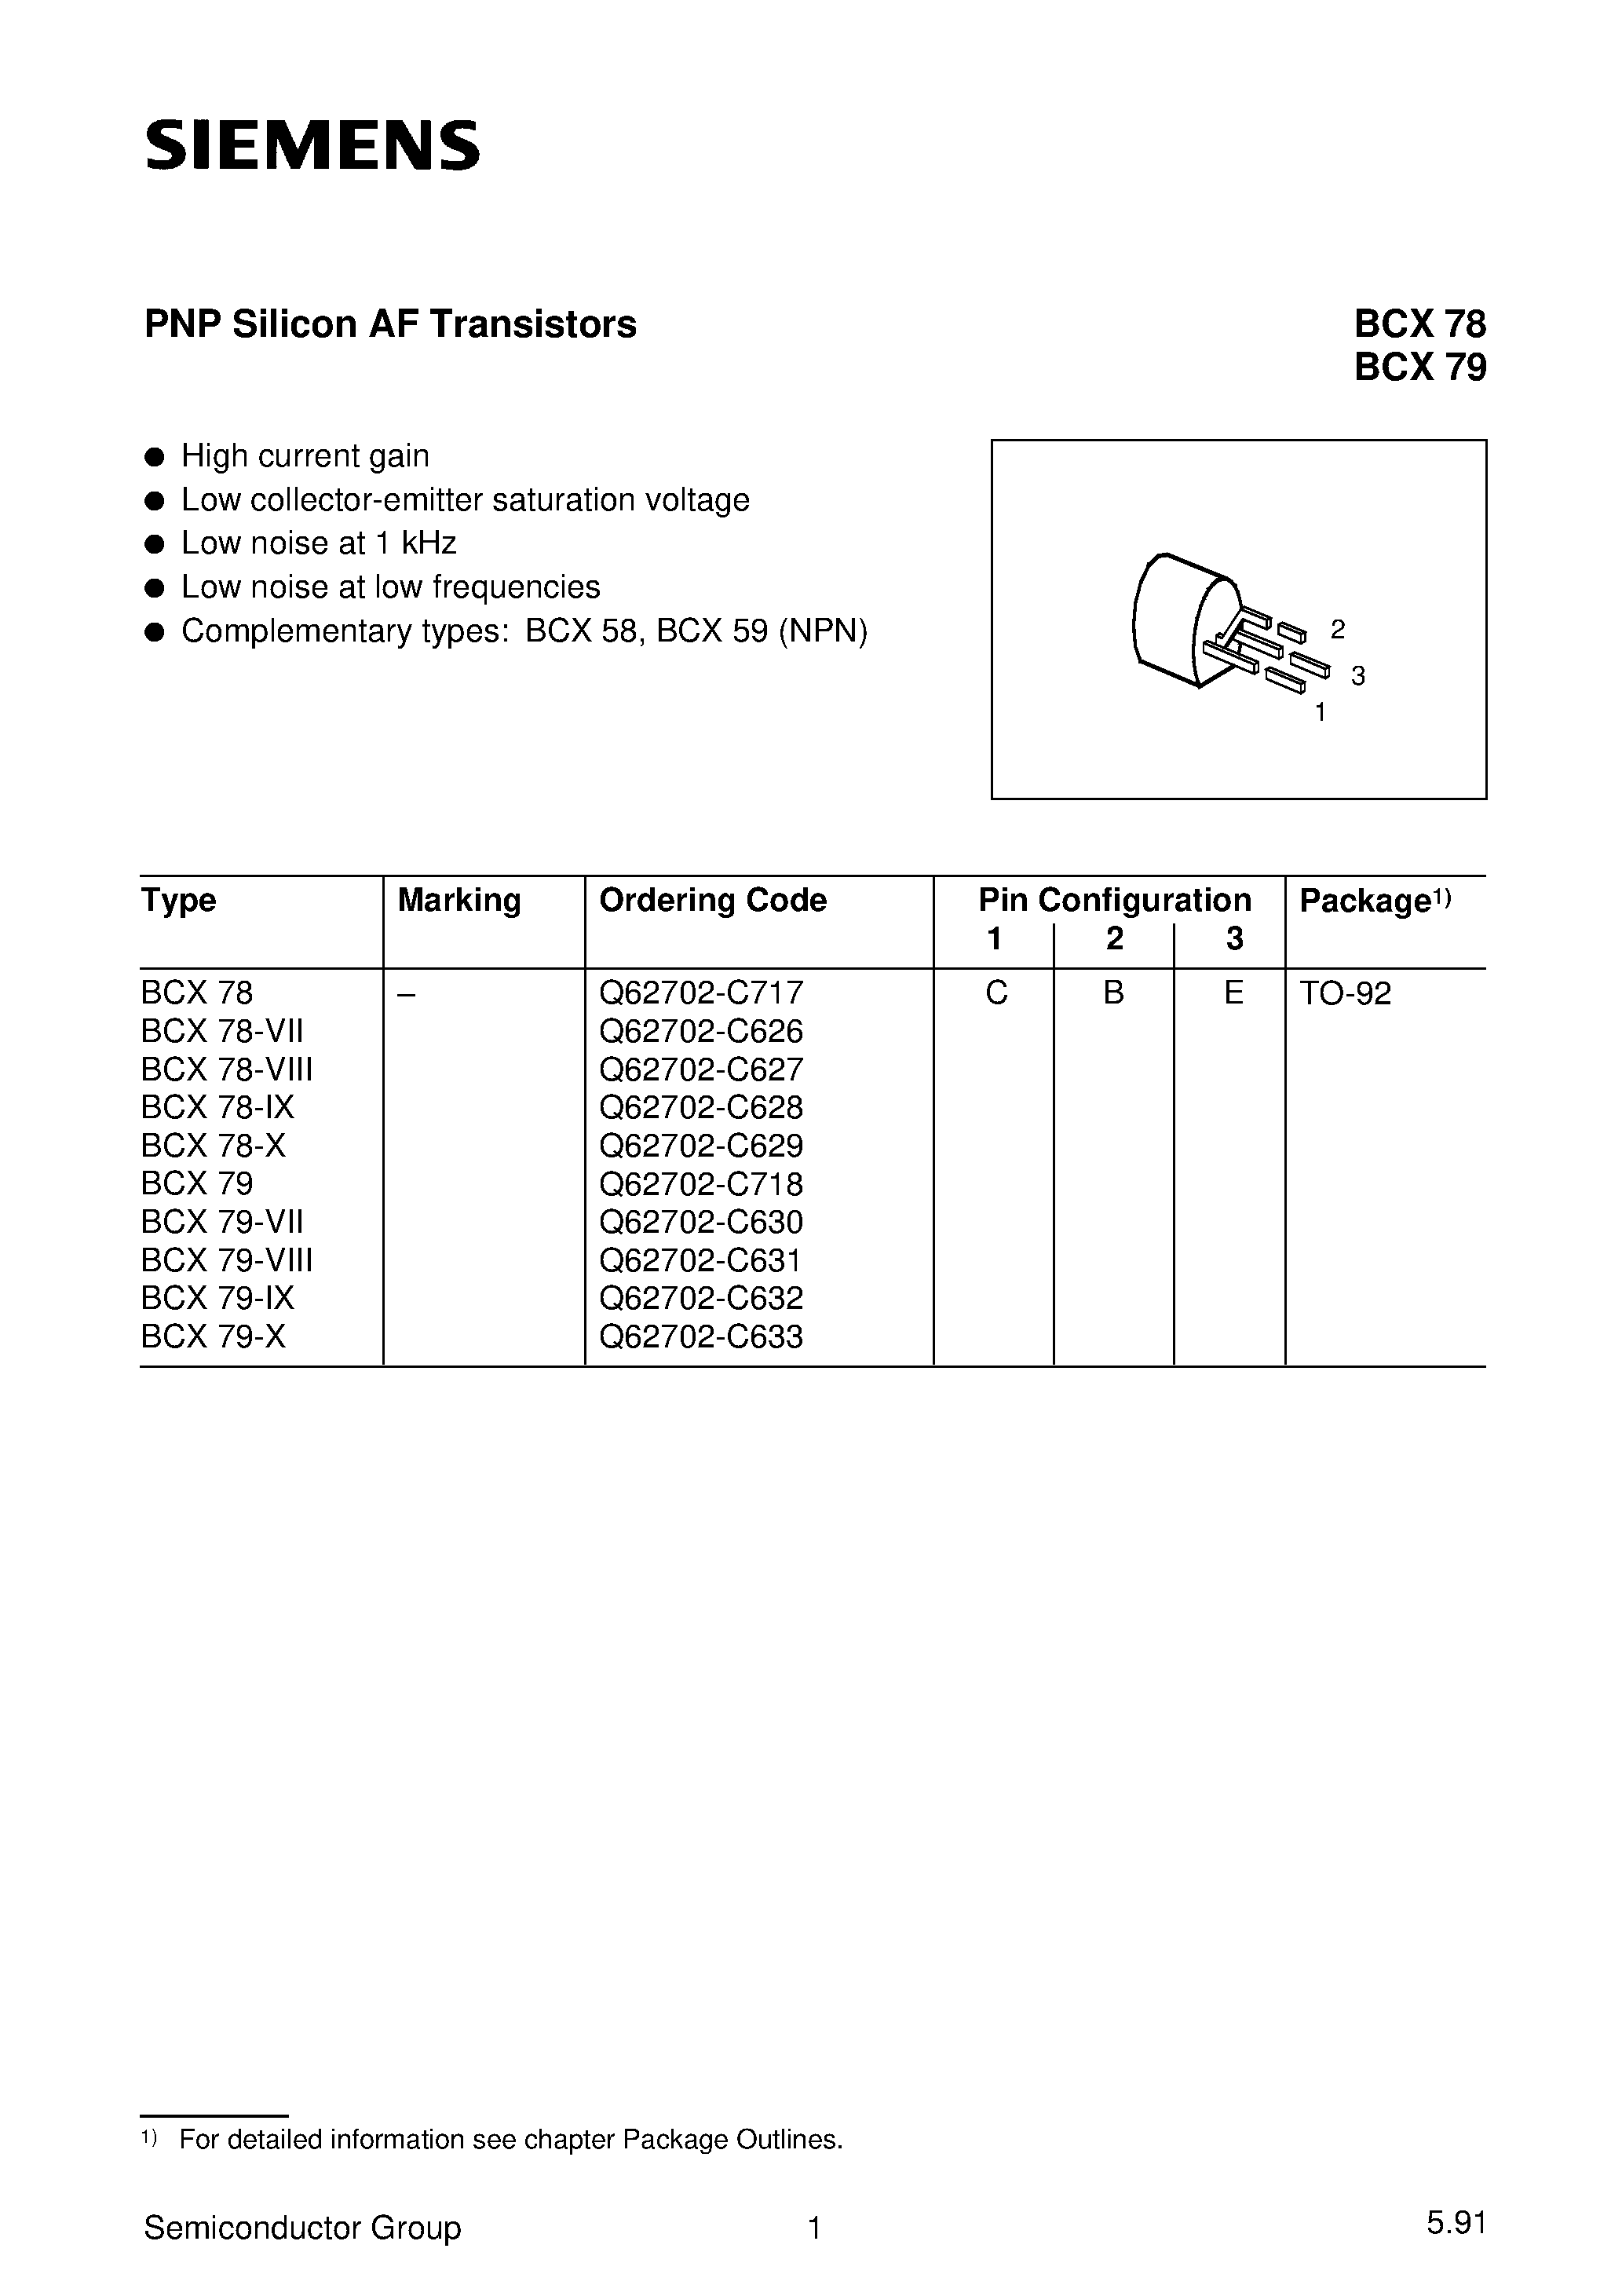 Datasheet BCX79-VII - PNP Silicon AF Transistors (High current gain Low collector-emitter saturation voltage) page 1